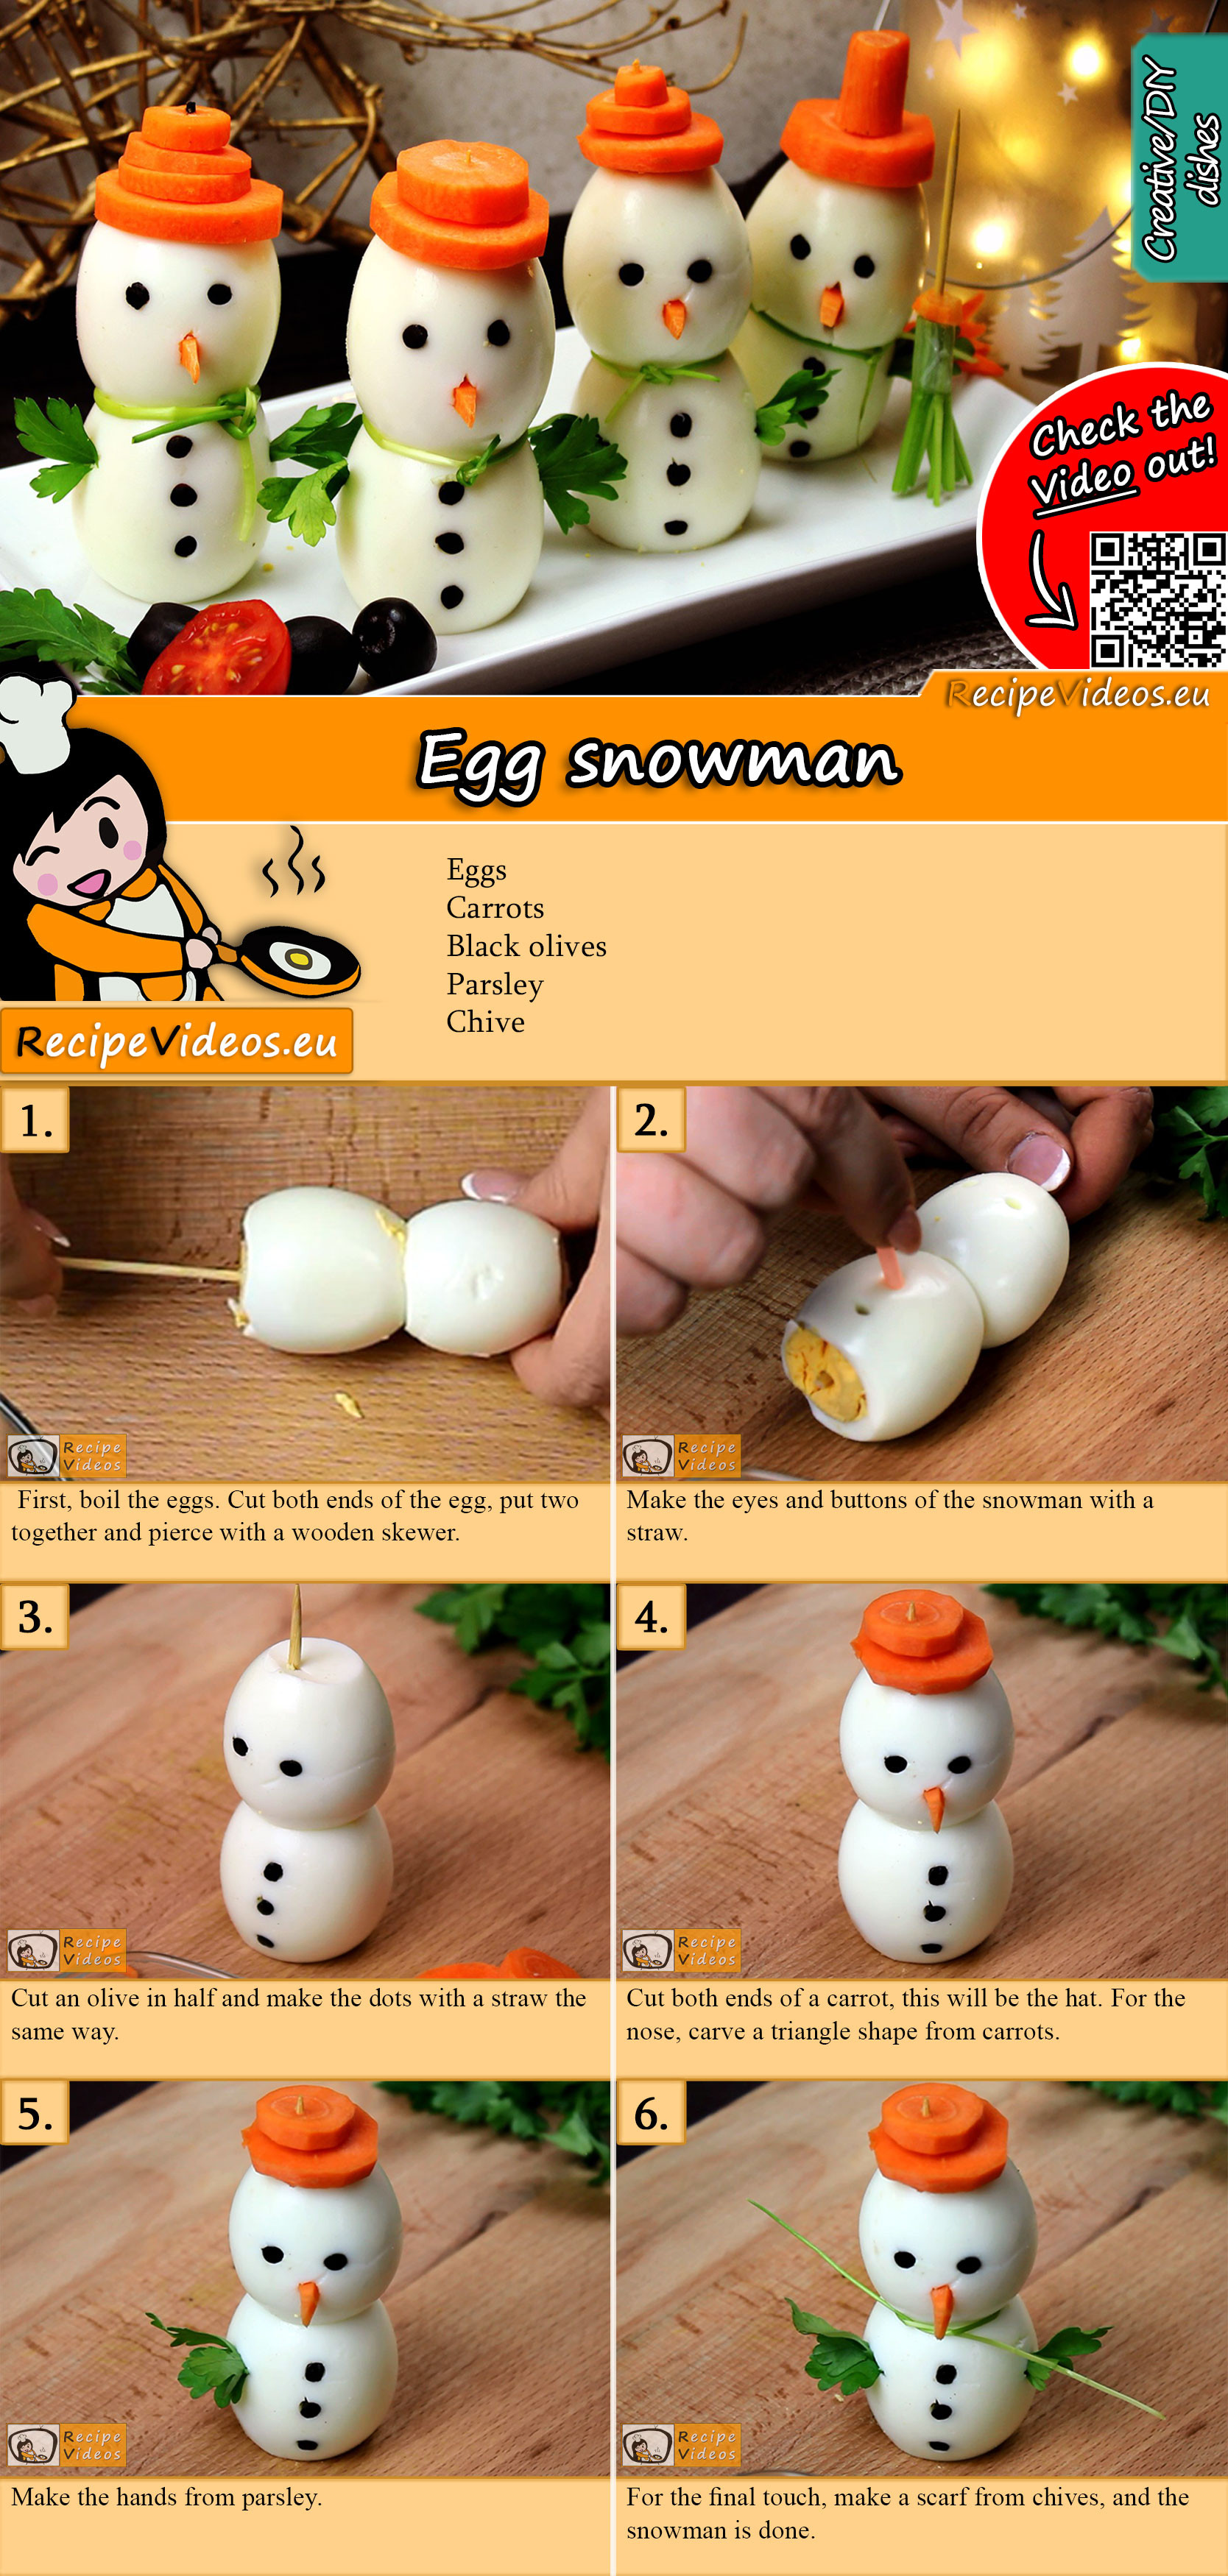 Egg snowmen recipe with video